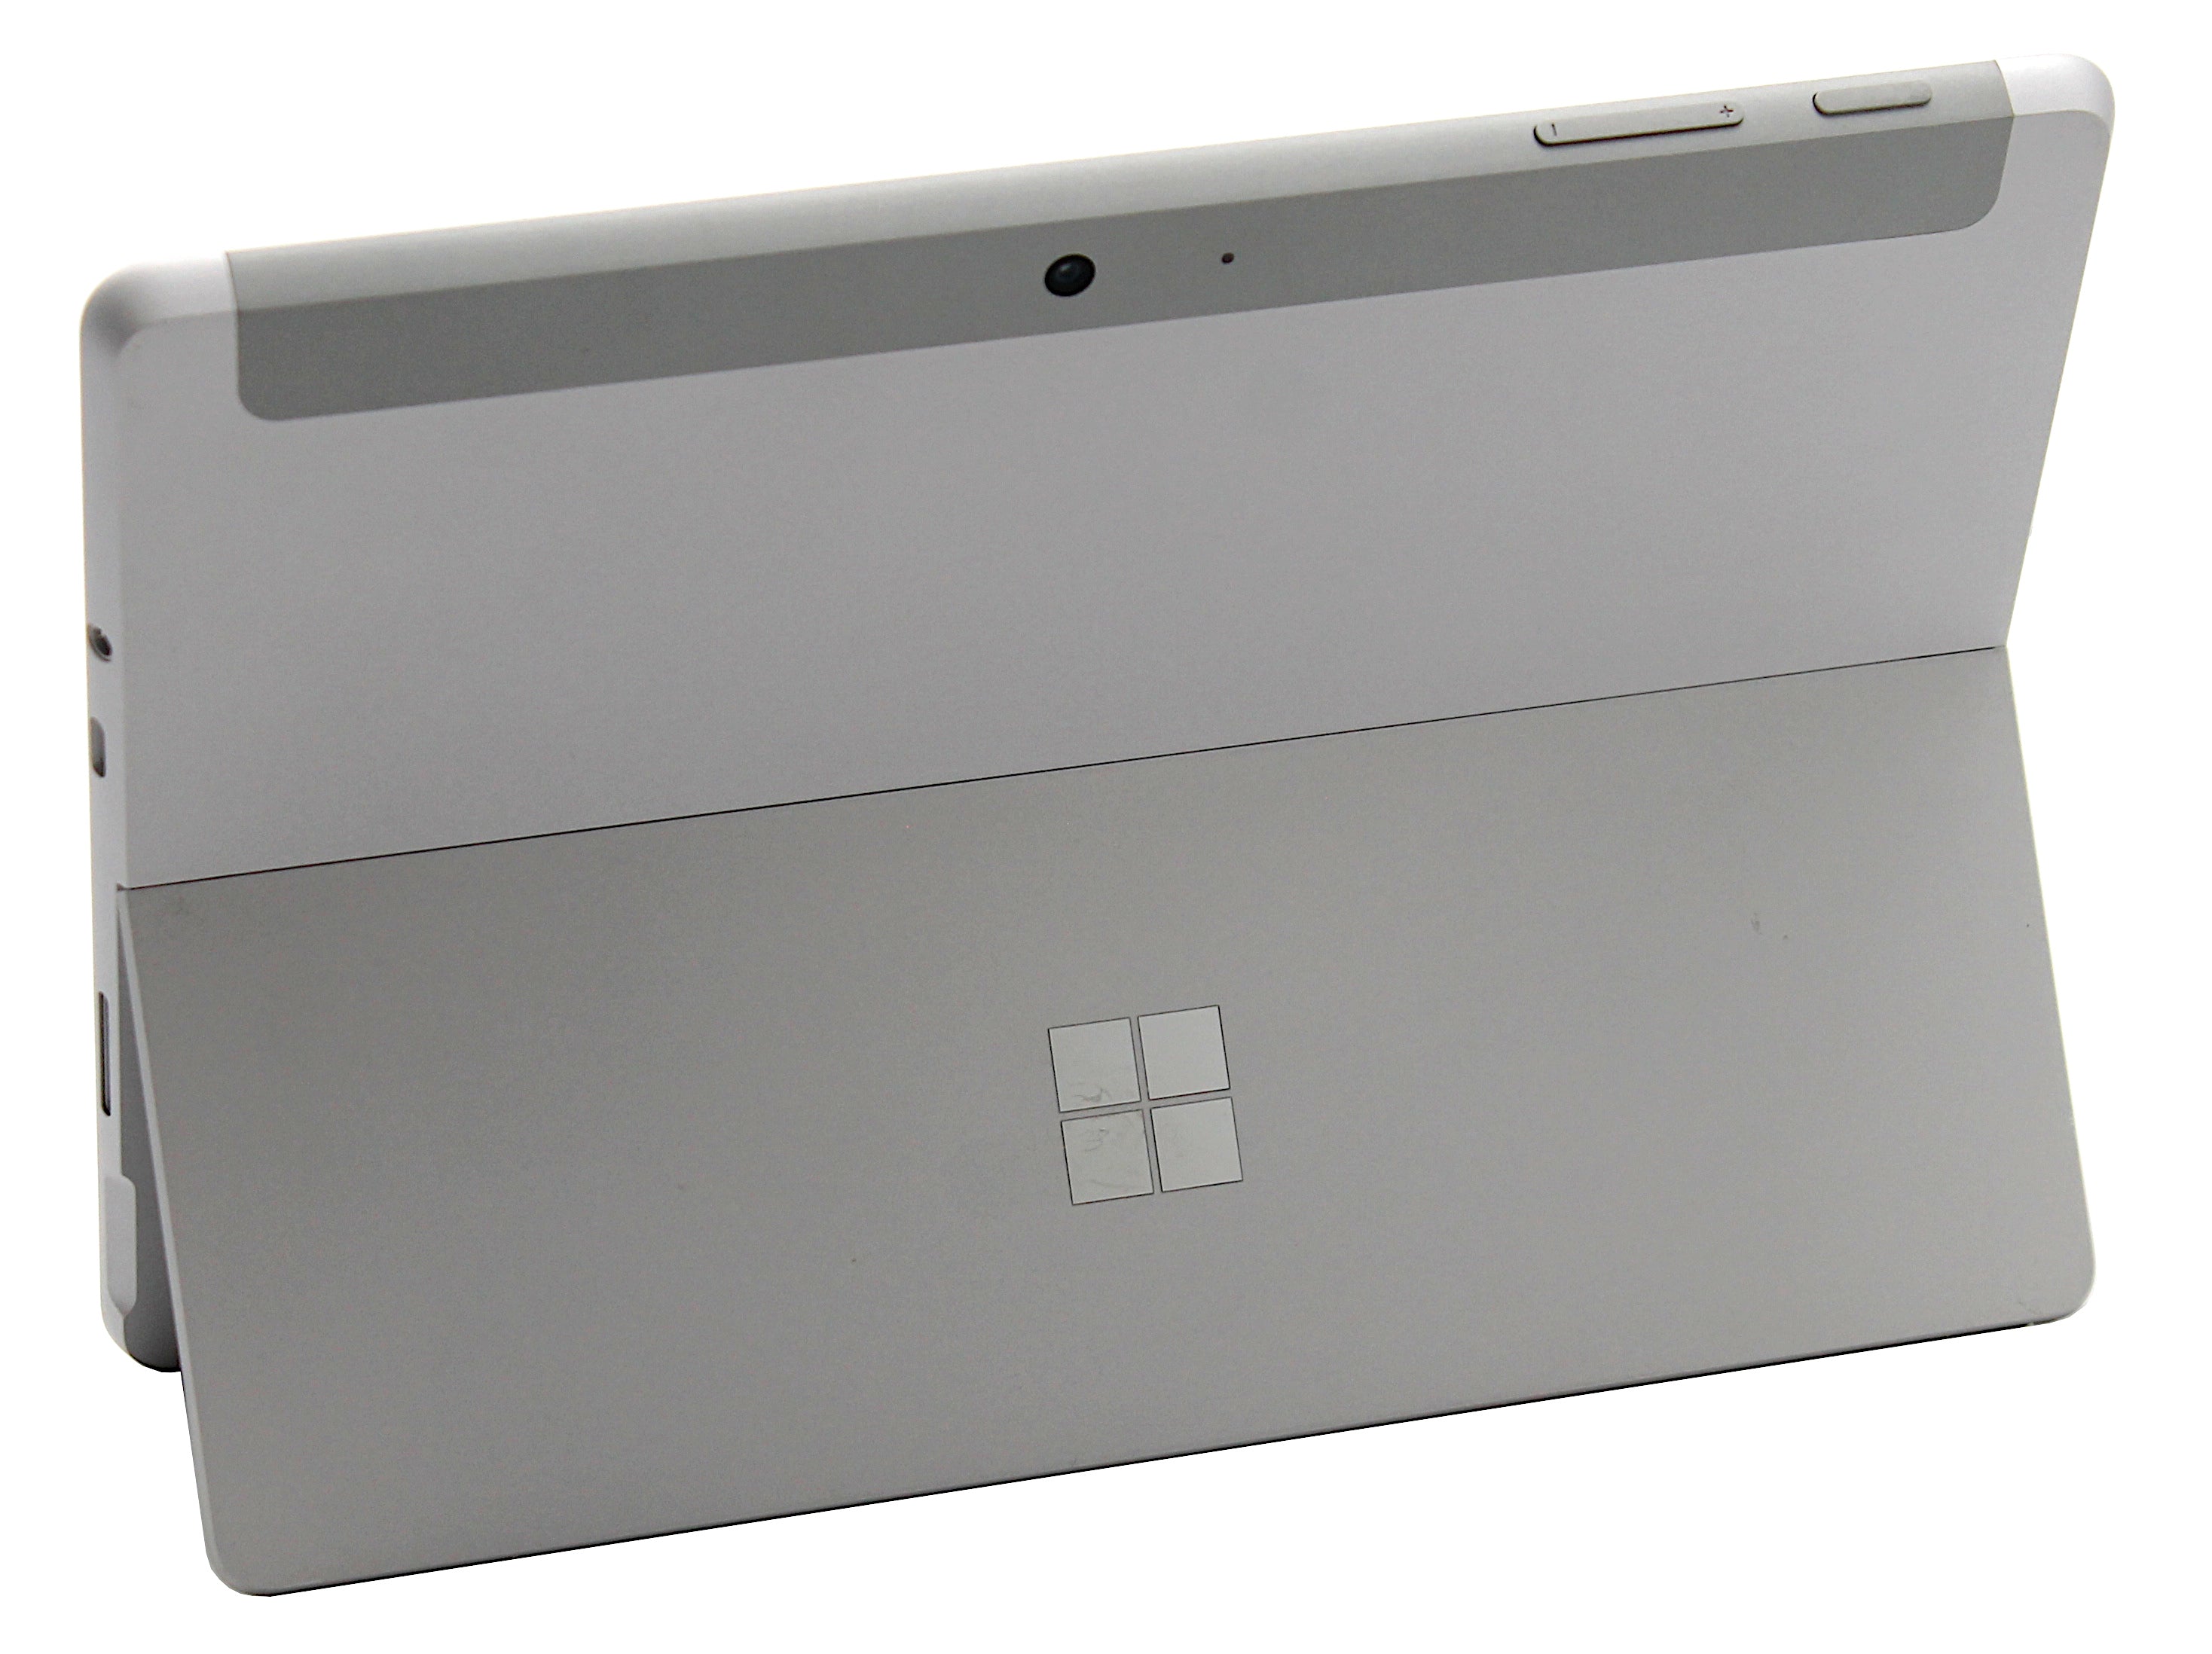 Microsoft Surface Go , Intel Pentium, 8GB RAM, 128GB eMMC, 1825, LTE